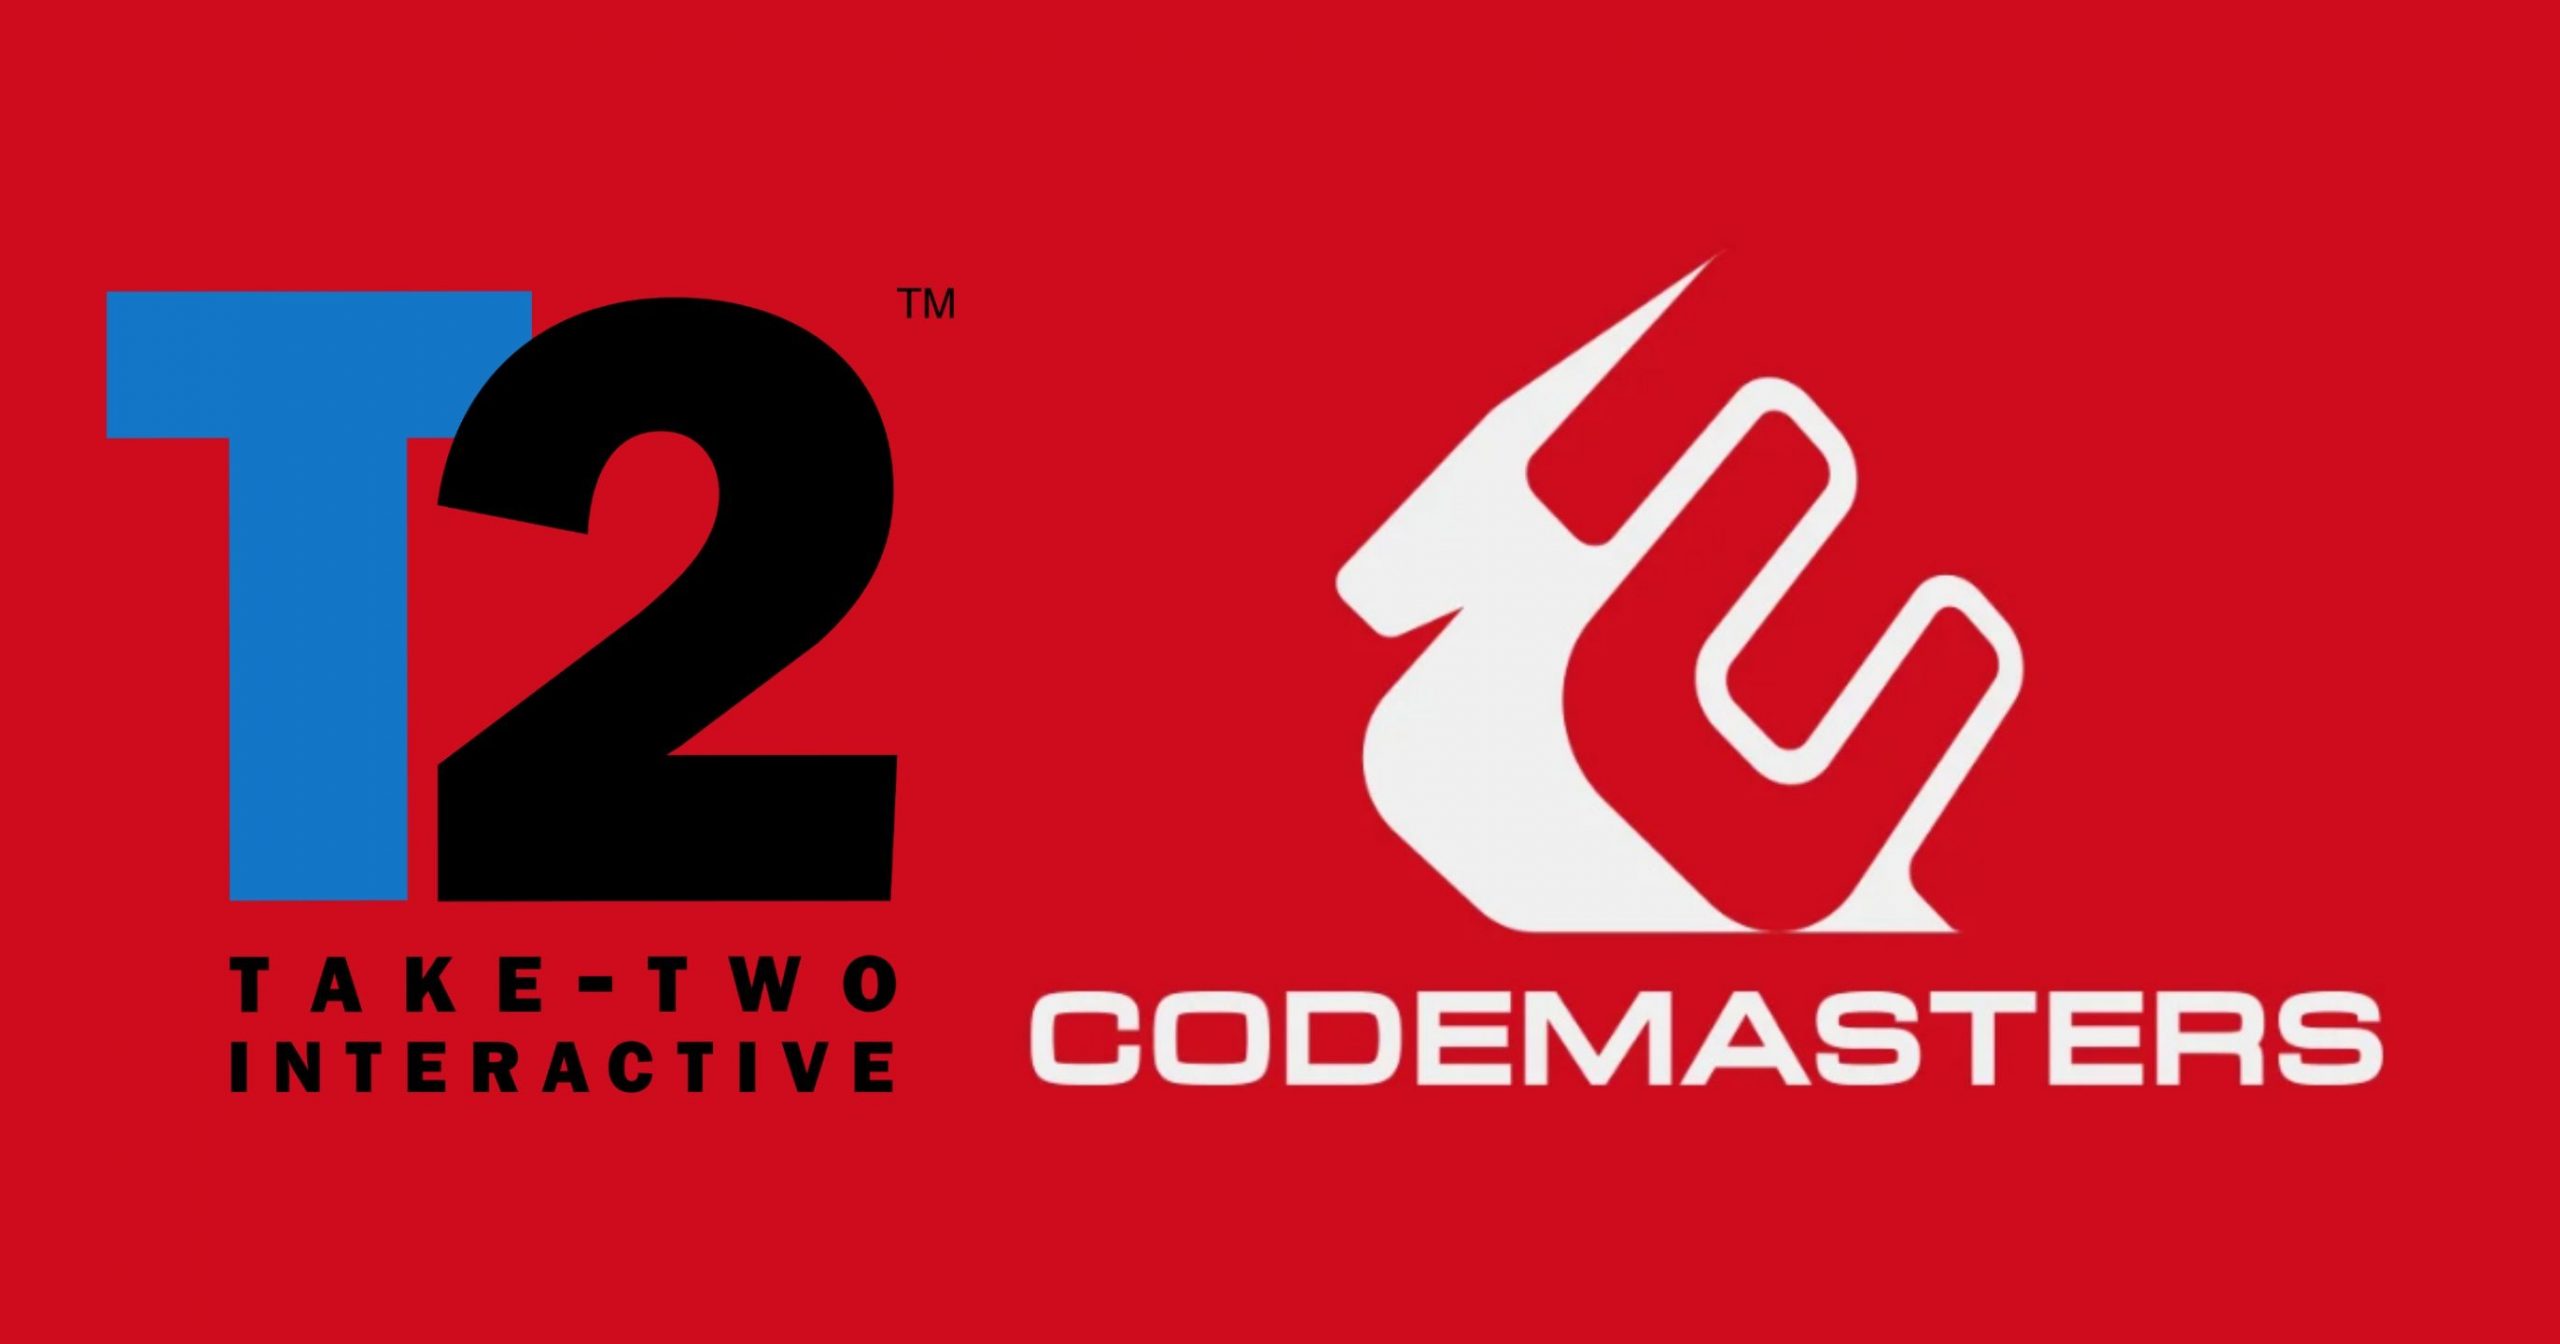 DiRT Developer Codemasters será adquirido por Take-Two Interactive por £ 726 ...